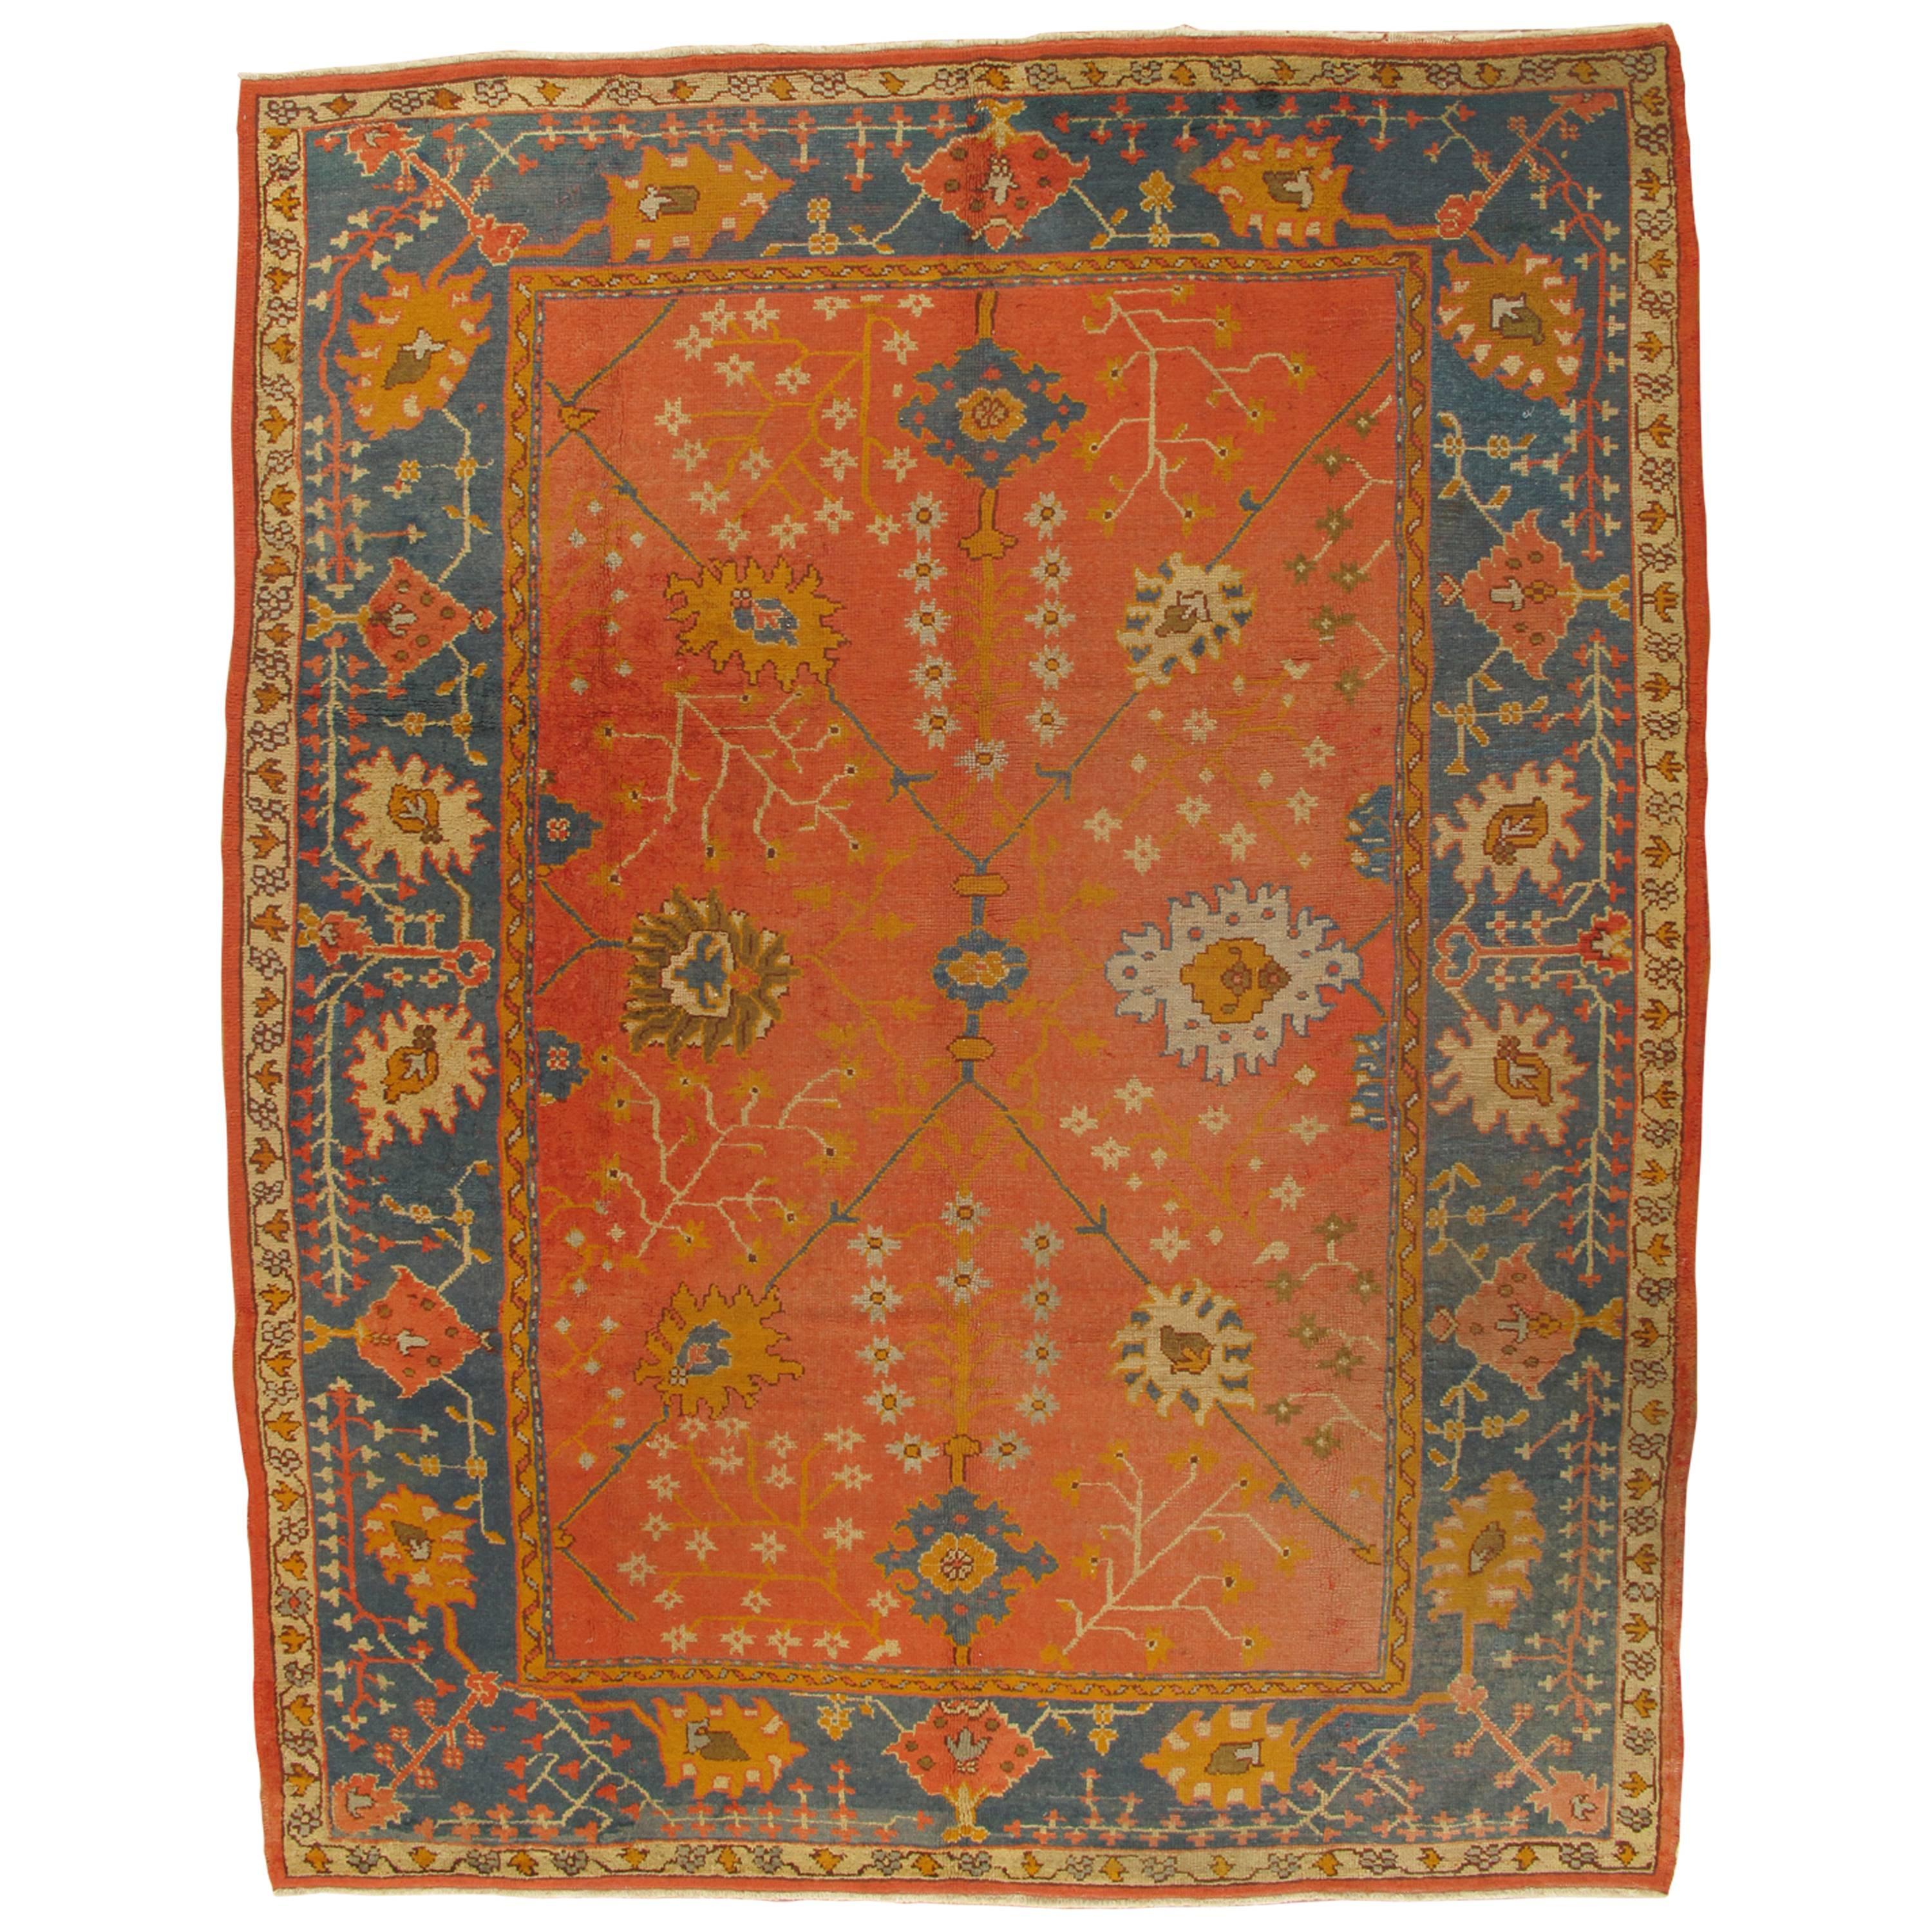 Antique Oushak Carpet, Oriental Rug, Handmade Orangey Coral, Ivory and Saffron